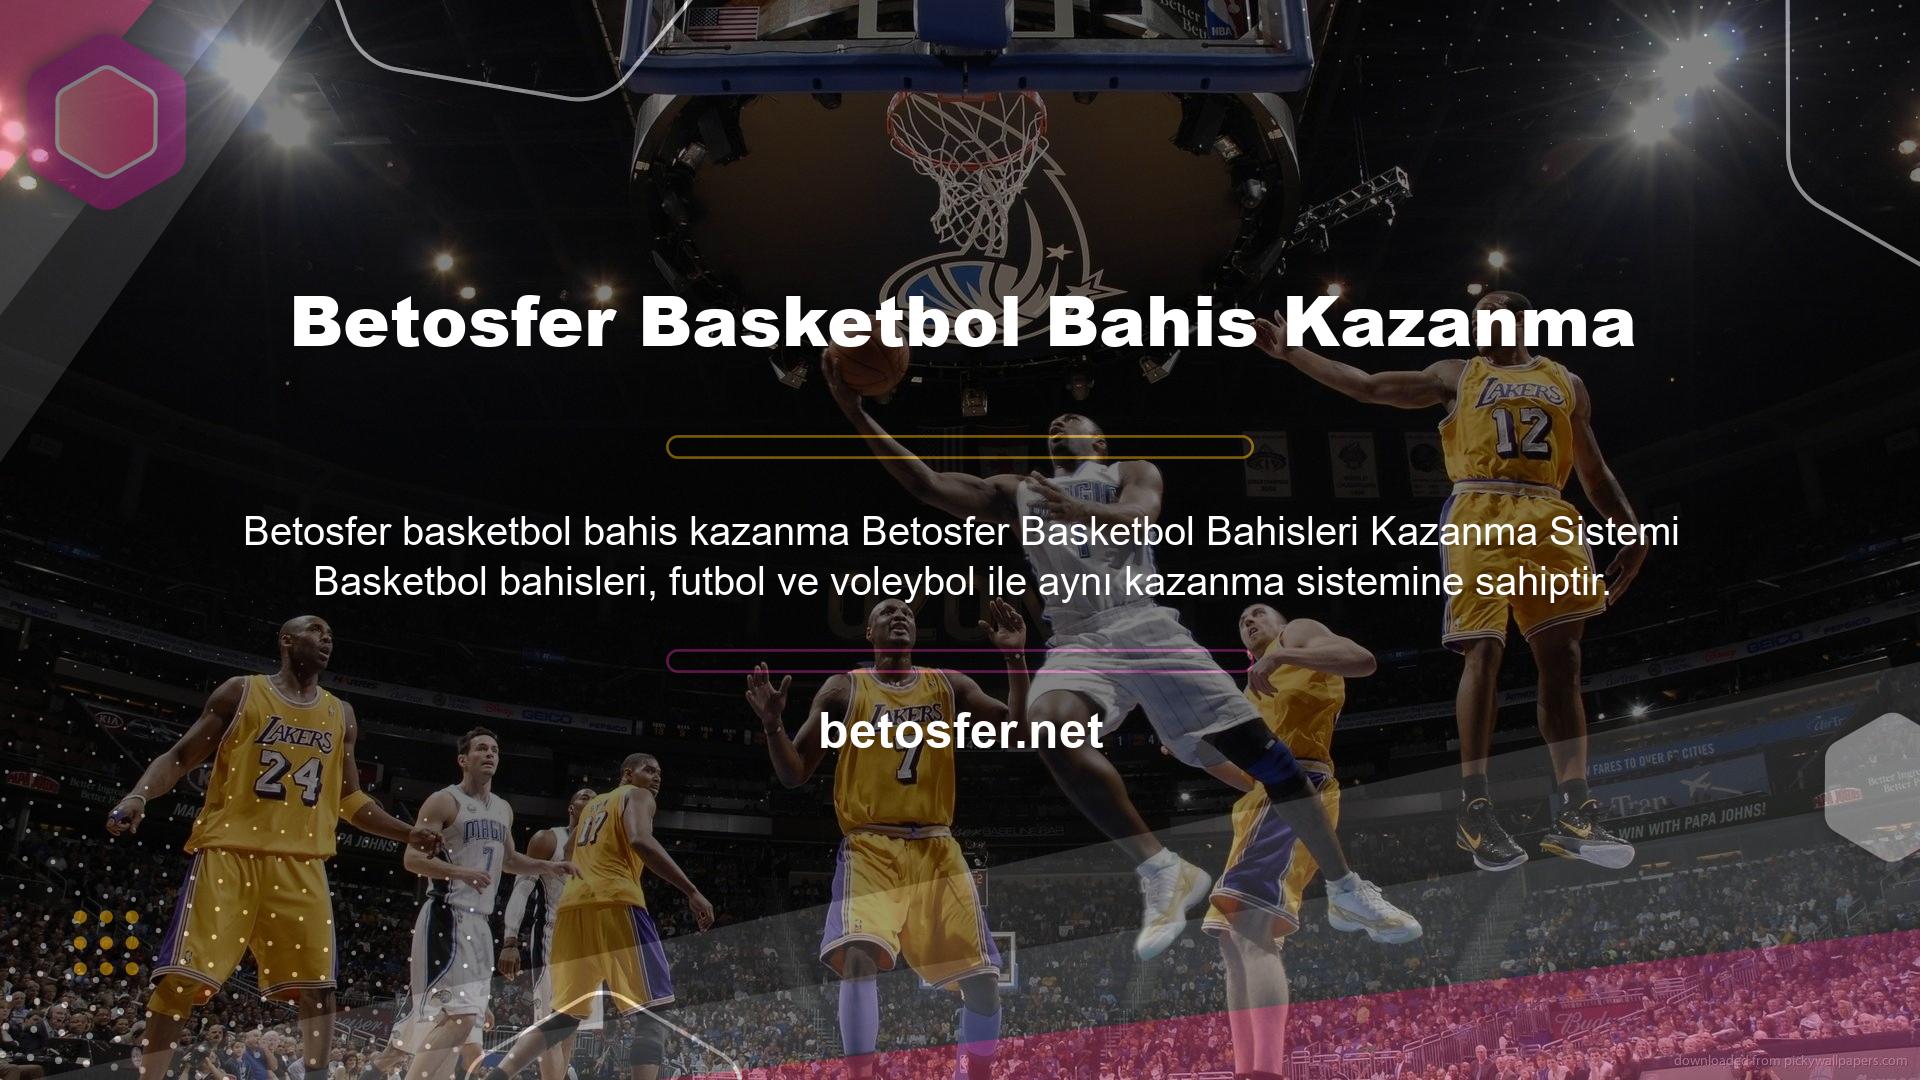 Betosfer Basketbol Bahis Kazanma